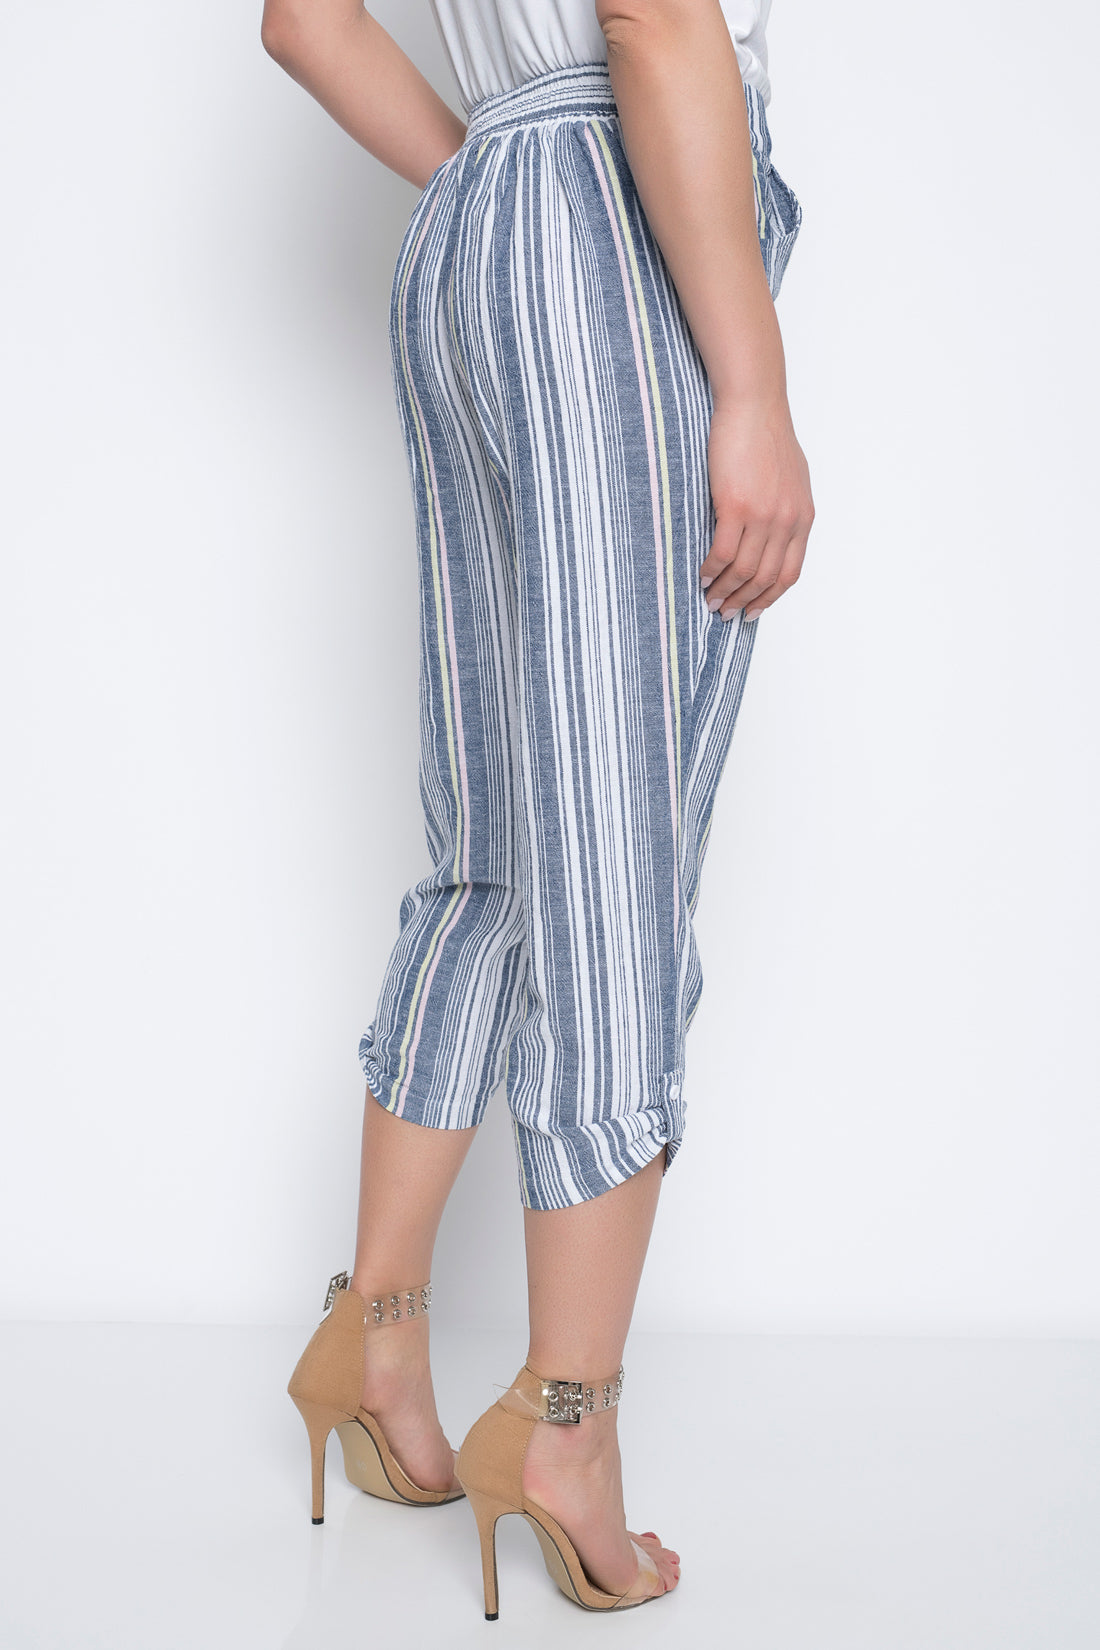 Best 25+ Deals for Striped Linen Pants